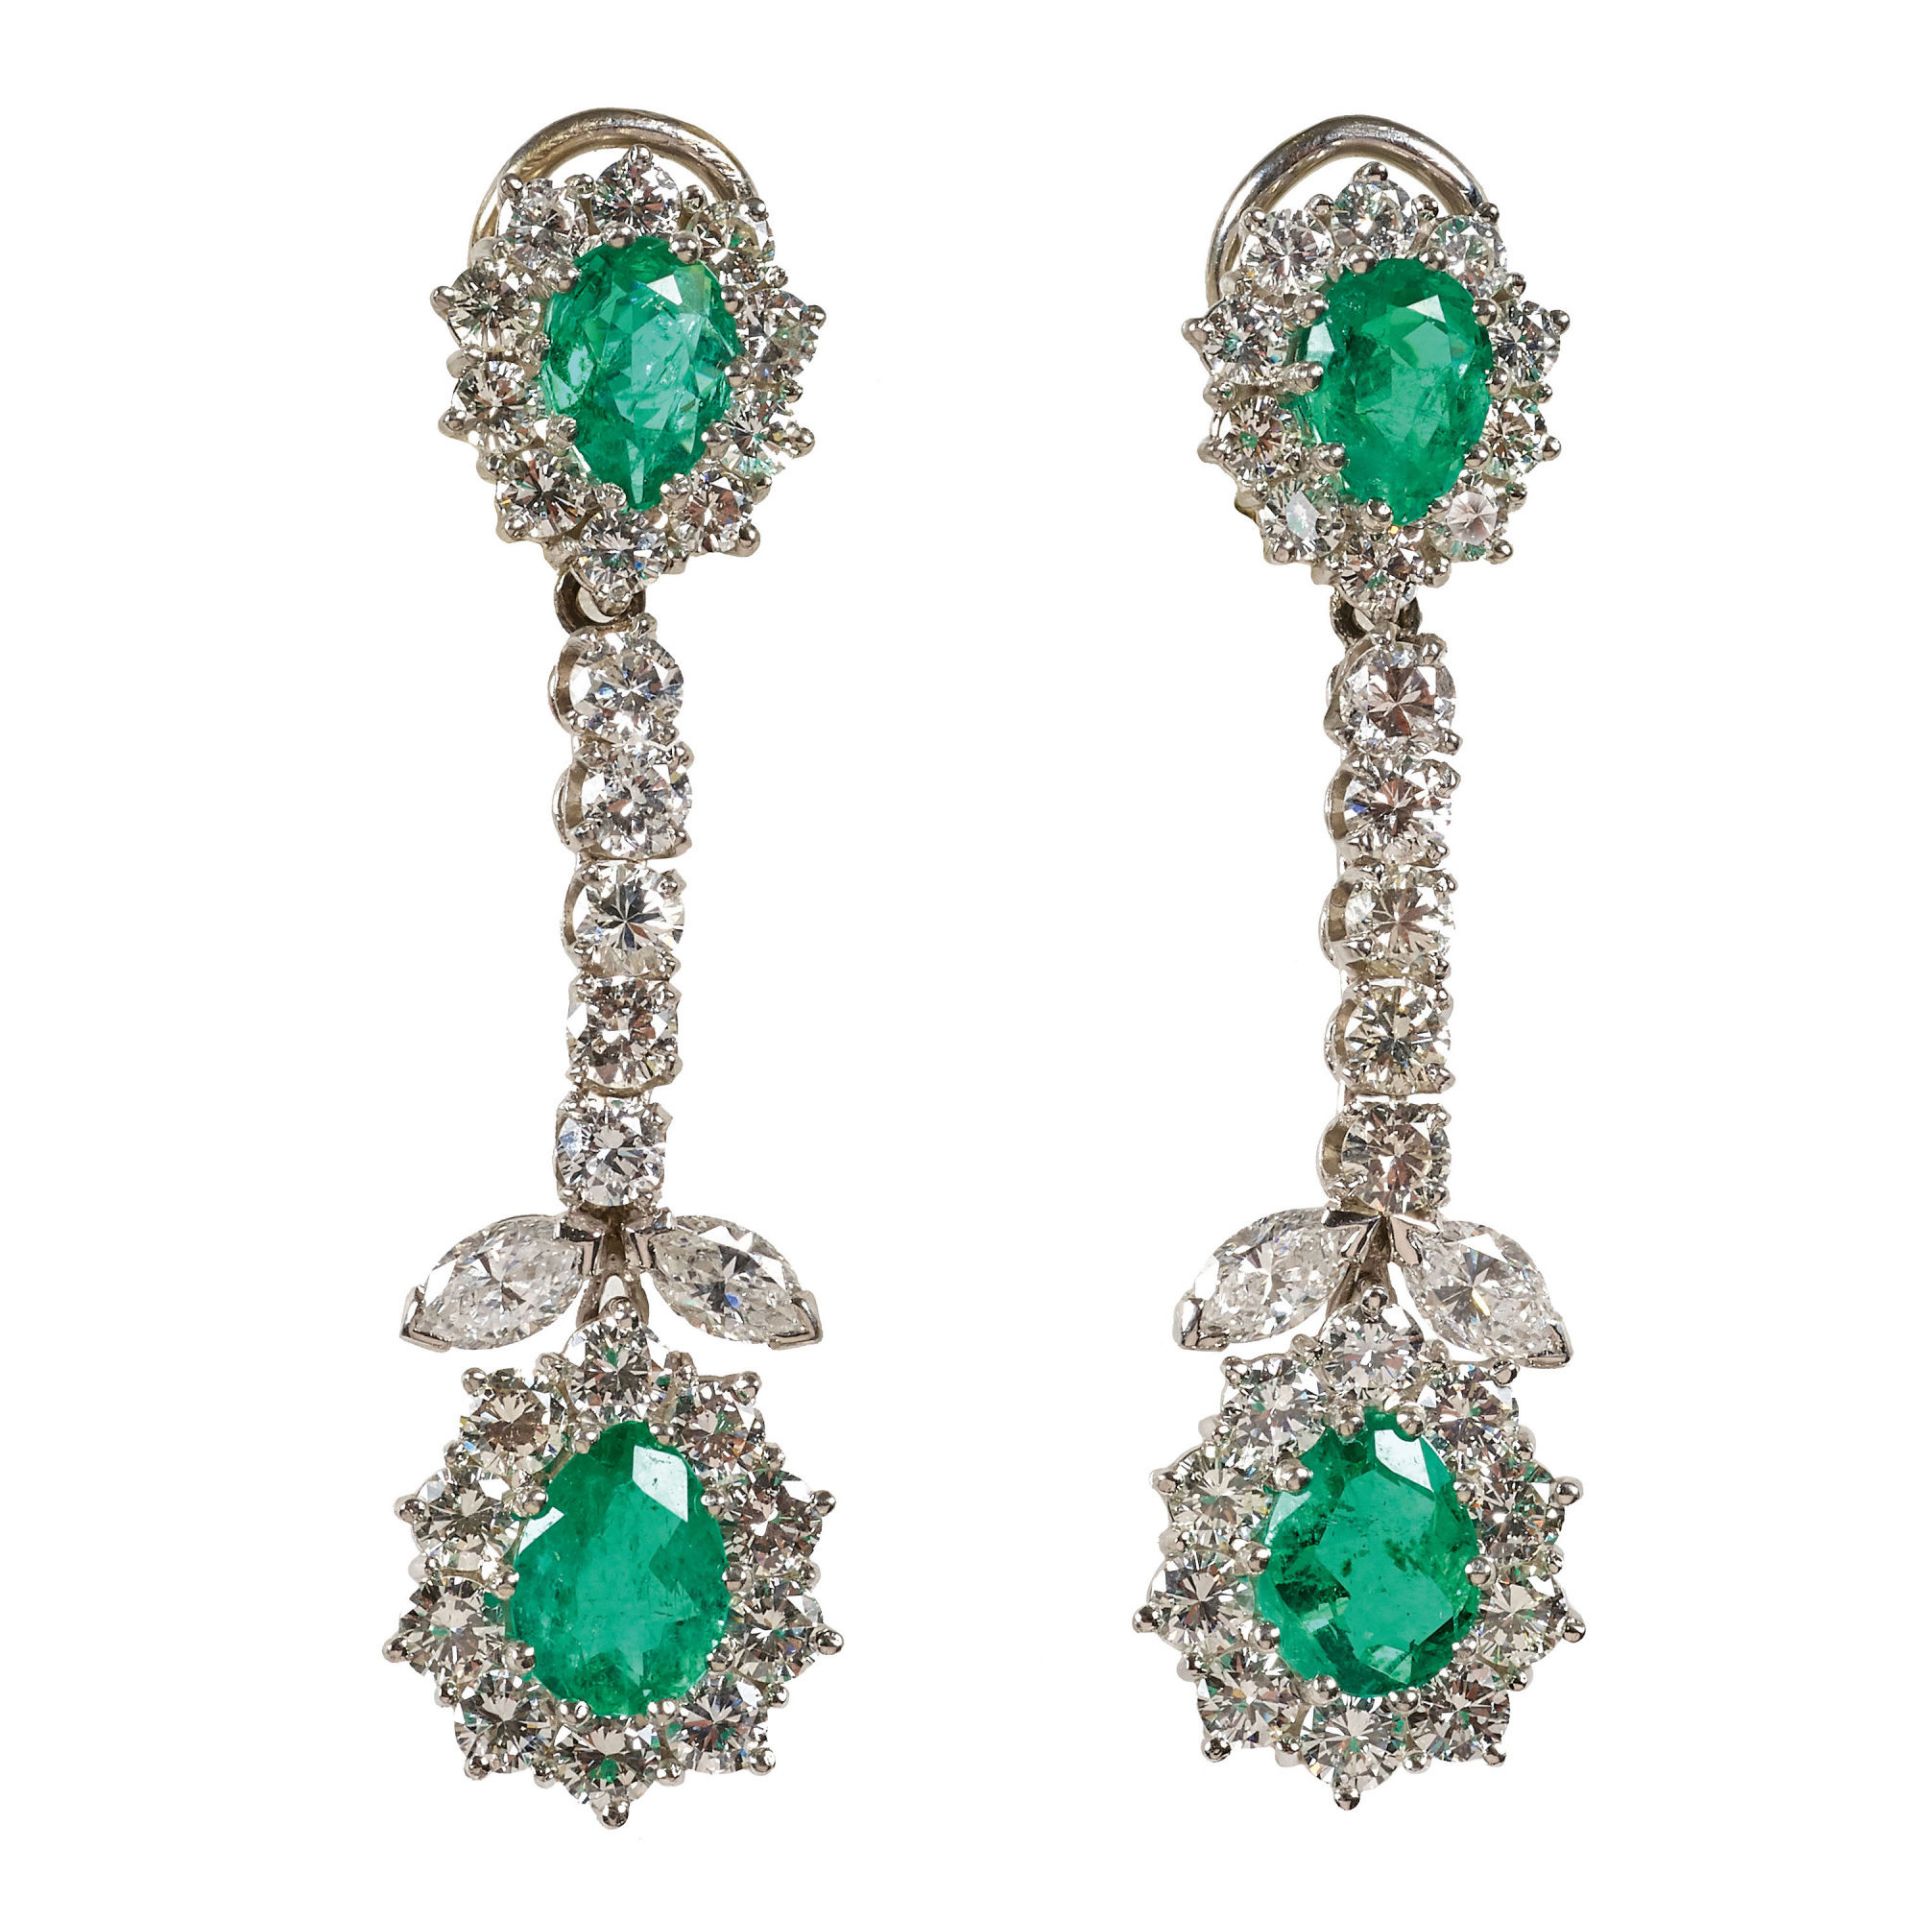 SMARAGD-BRILLANT-OHRHÄNGER / Emerald-diamond-pendant earrings